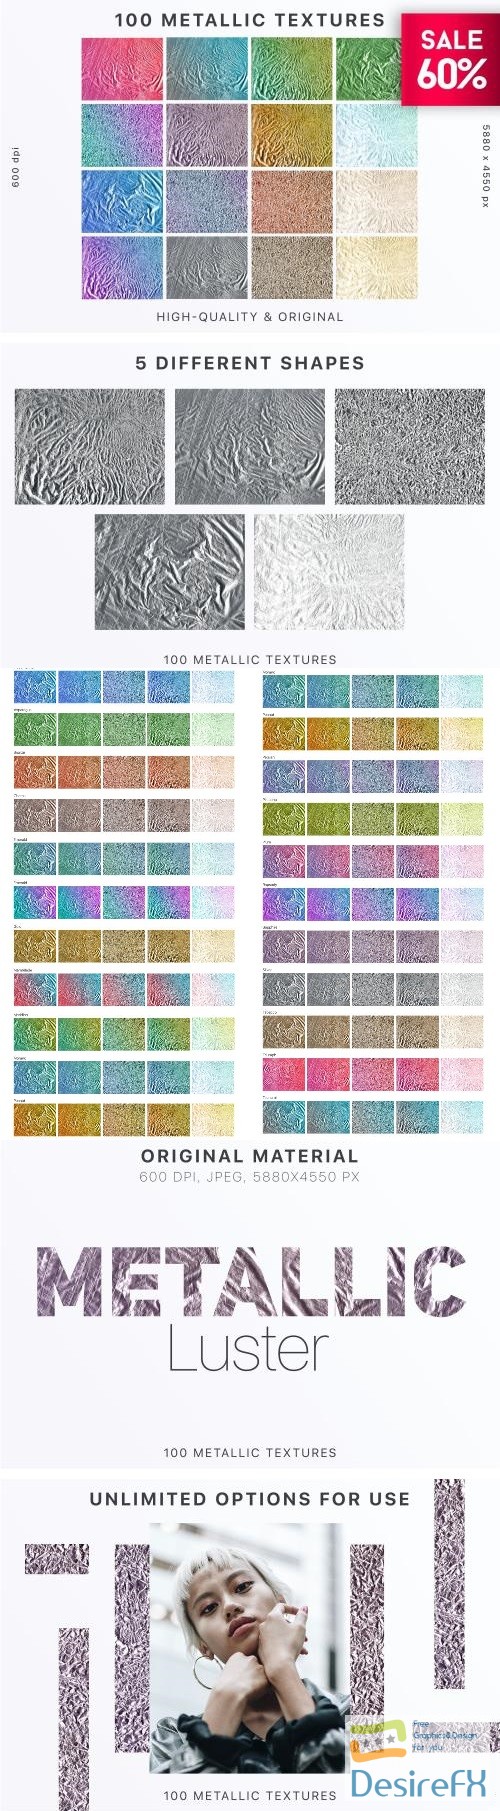 100 Original Metallic Textures - 2270594